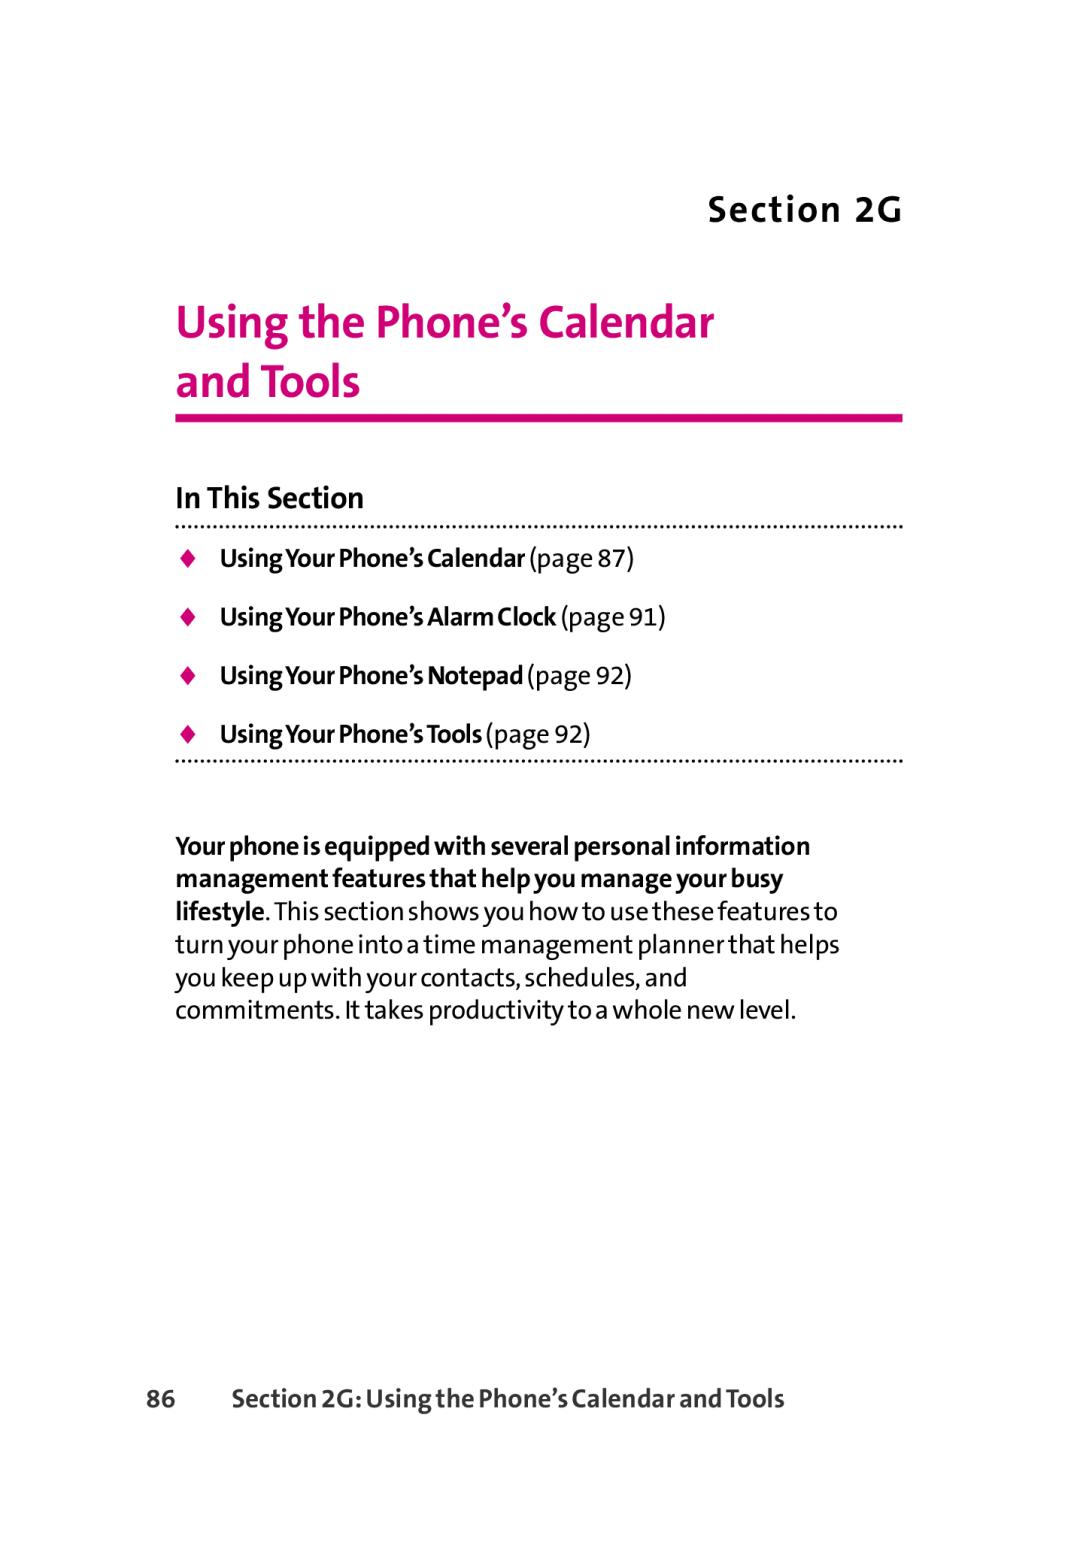 LG Electronics 350 Using the Phone’s Calendar and Tools, G, UsingYourPhone’sCalendarpage UsingYourPhone’sAlarmClockpage 